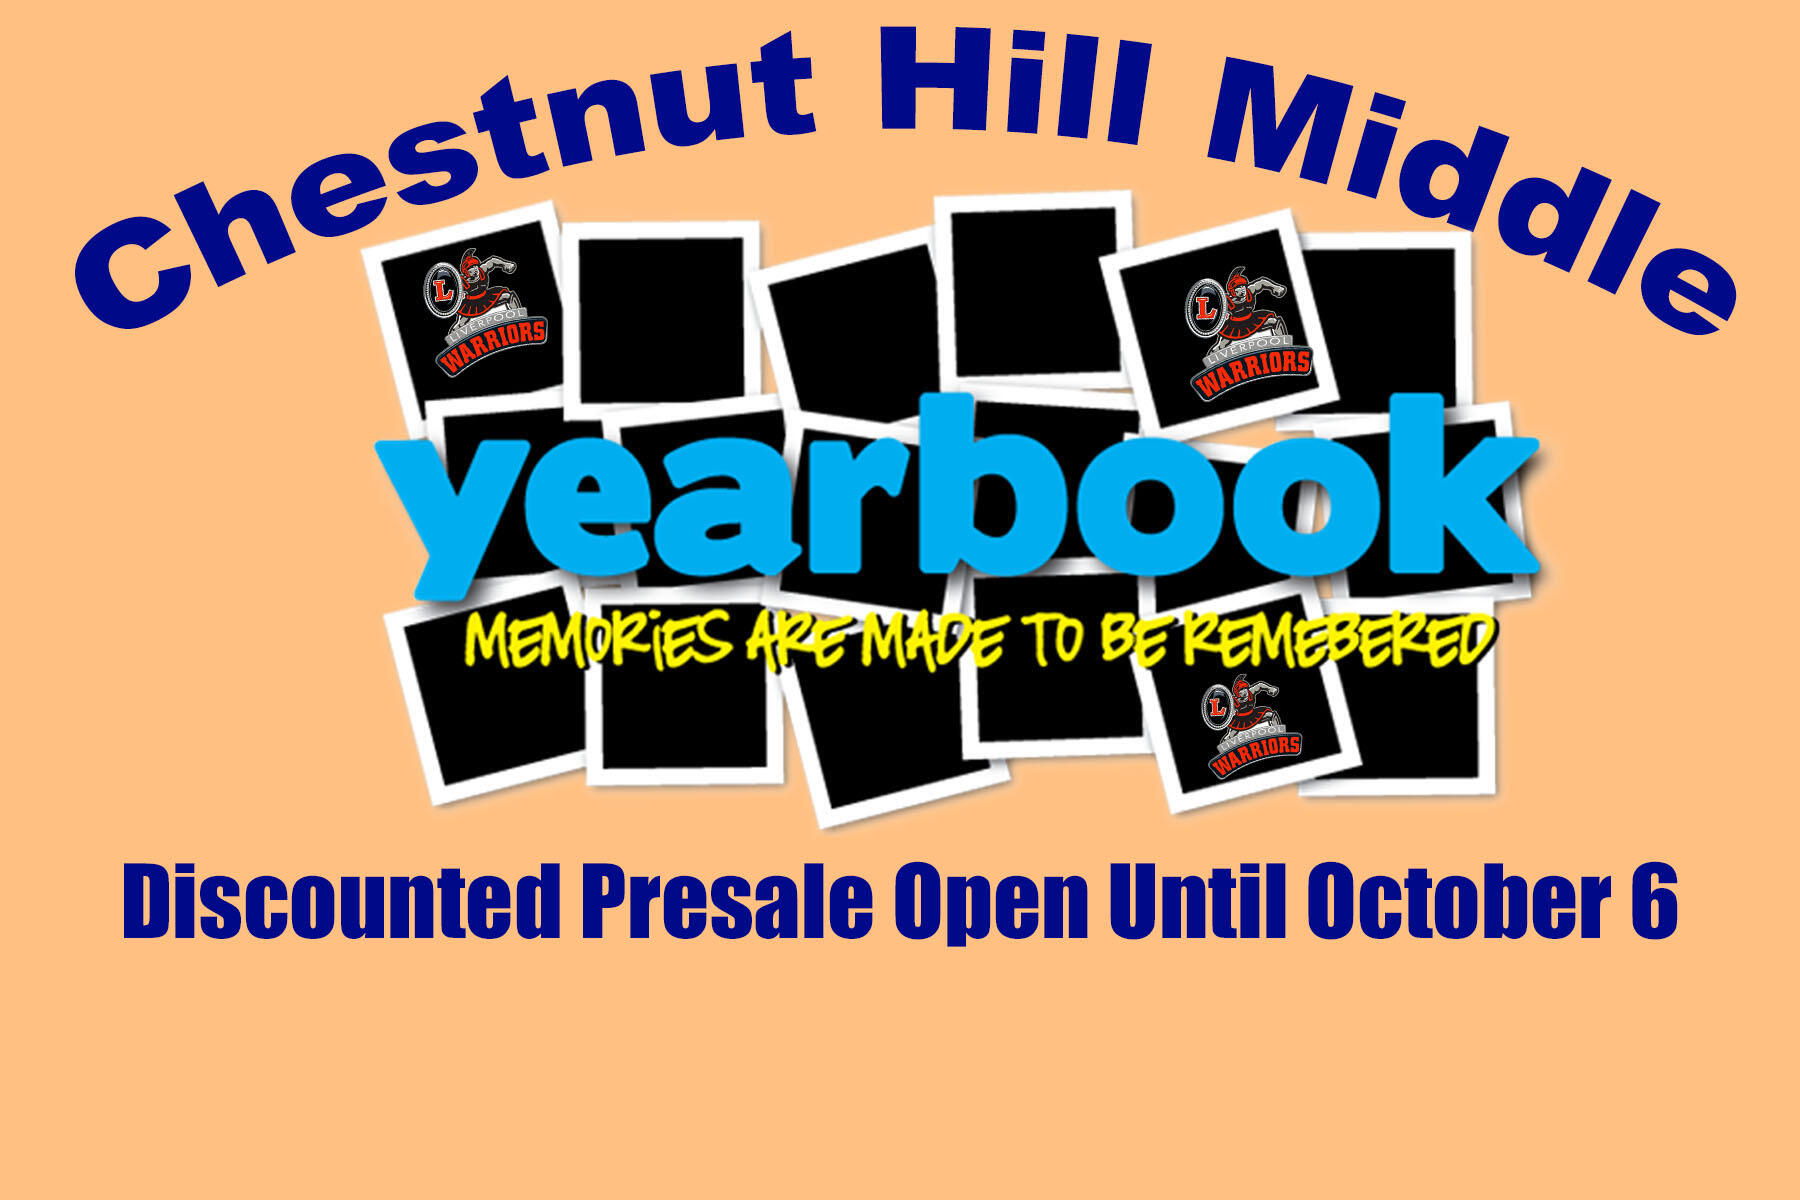 Discounted yearbook sales open until October 6